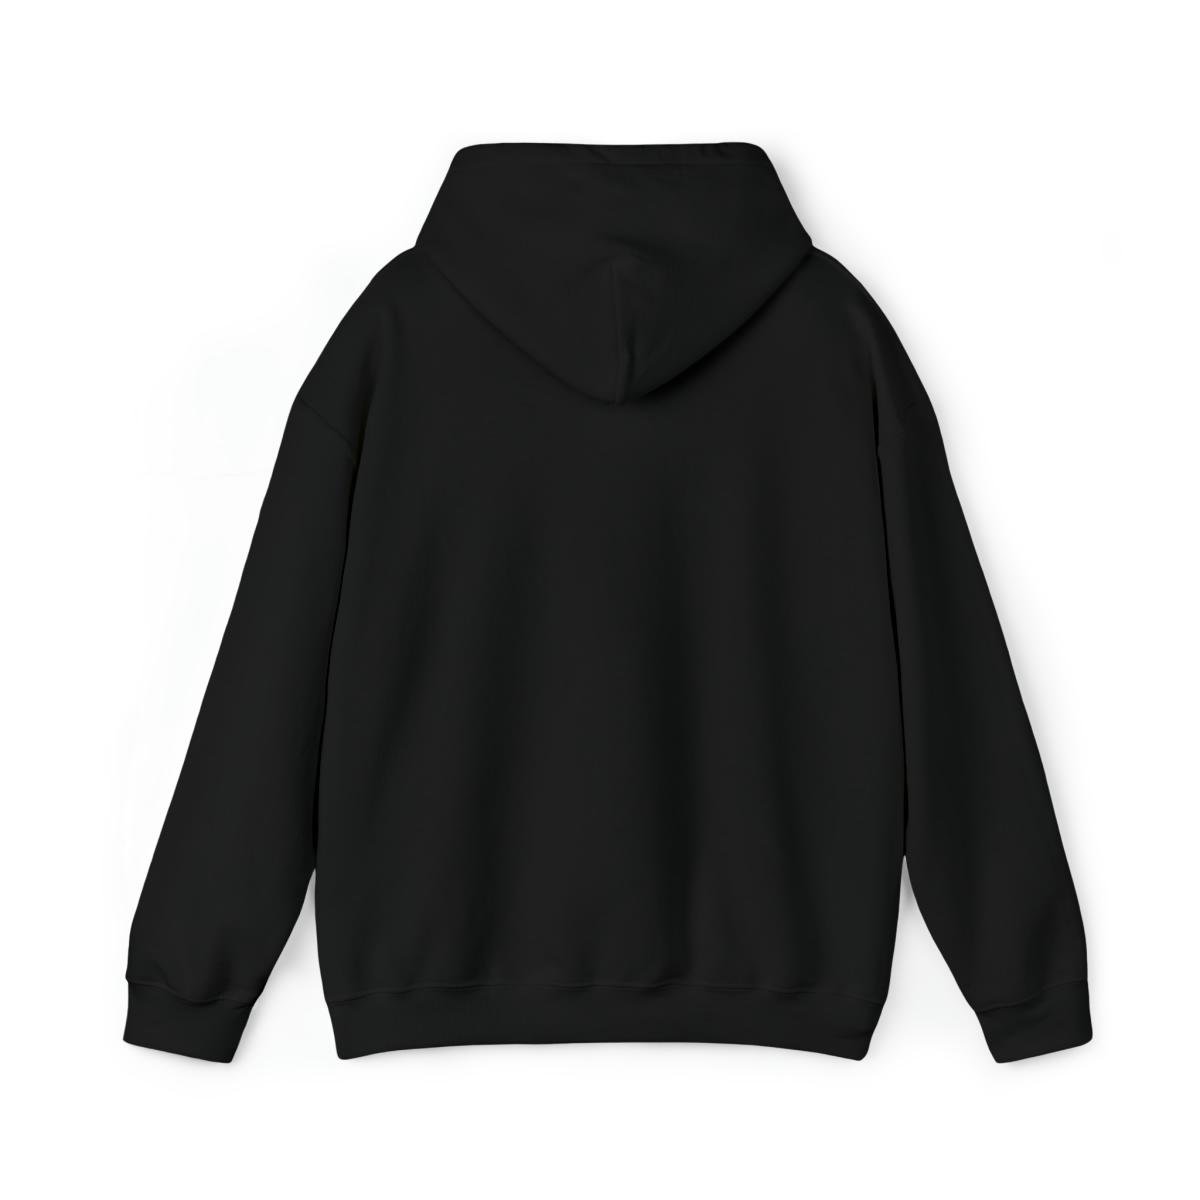 Motivik – The Head Collector Pullover Hooded Sweatshirt